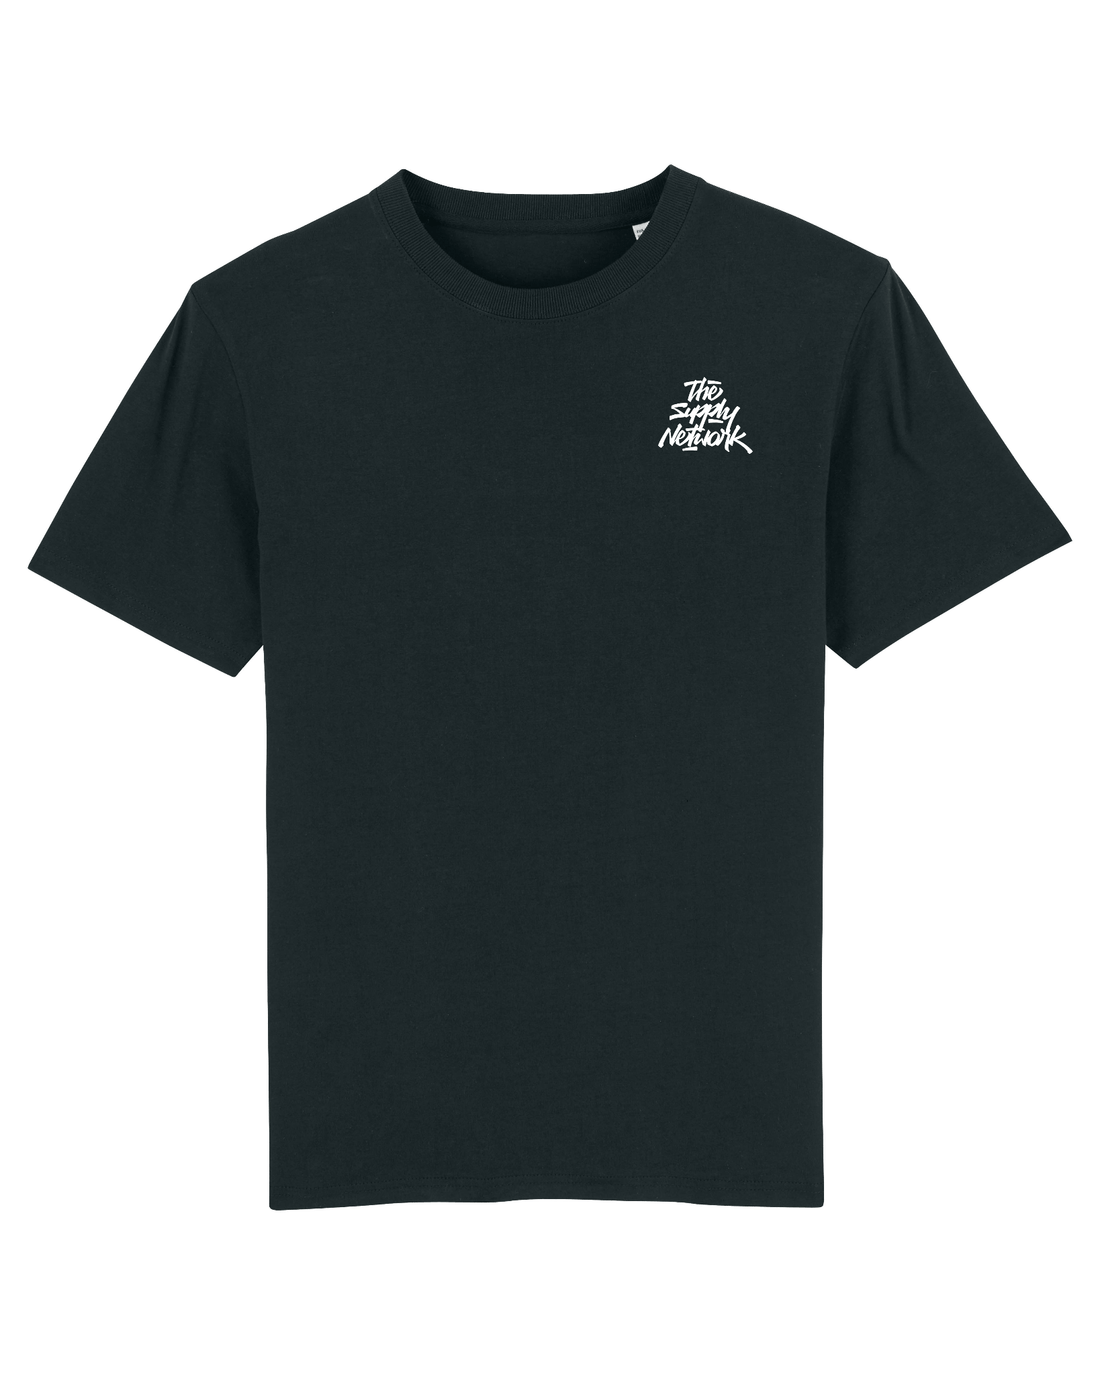 Black Skater T-Shirt, The Supply Network Front Print